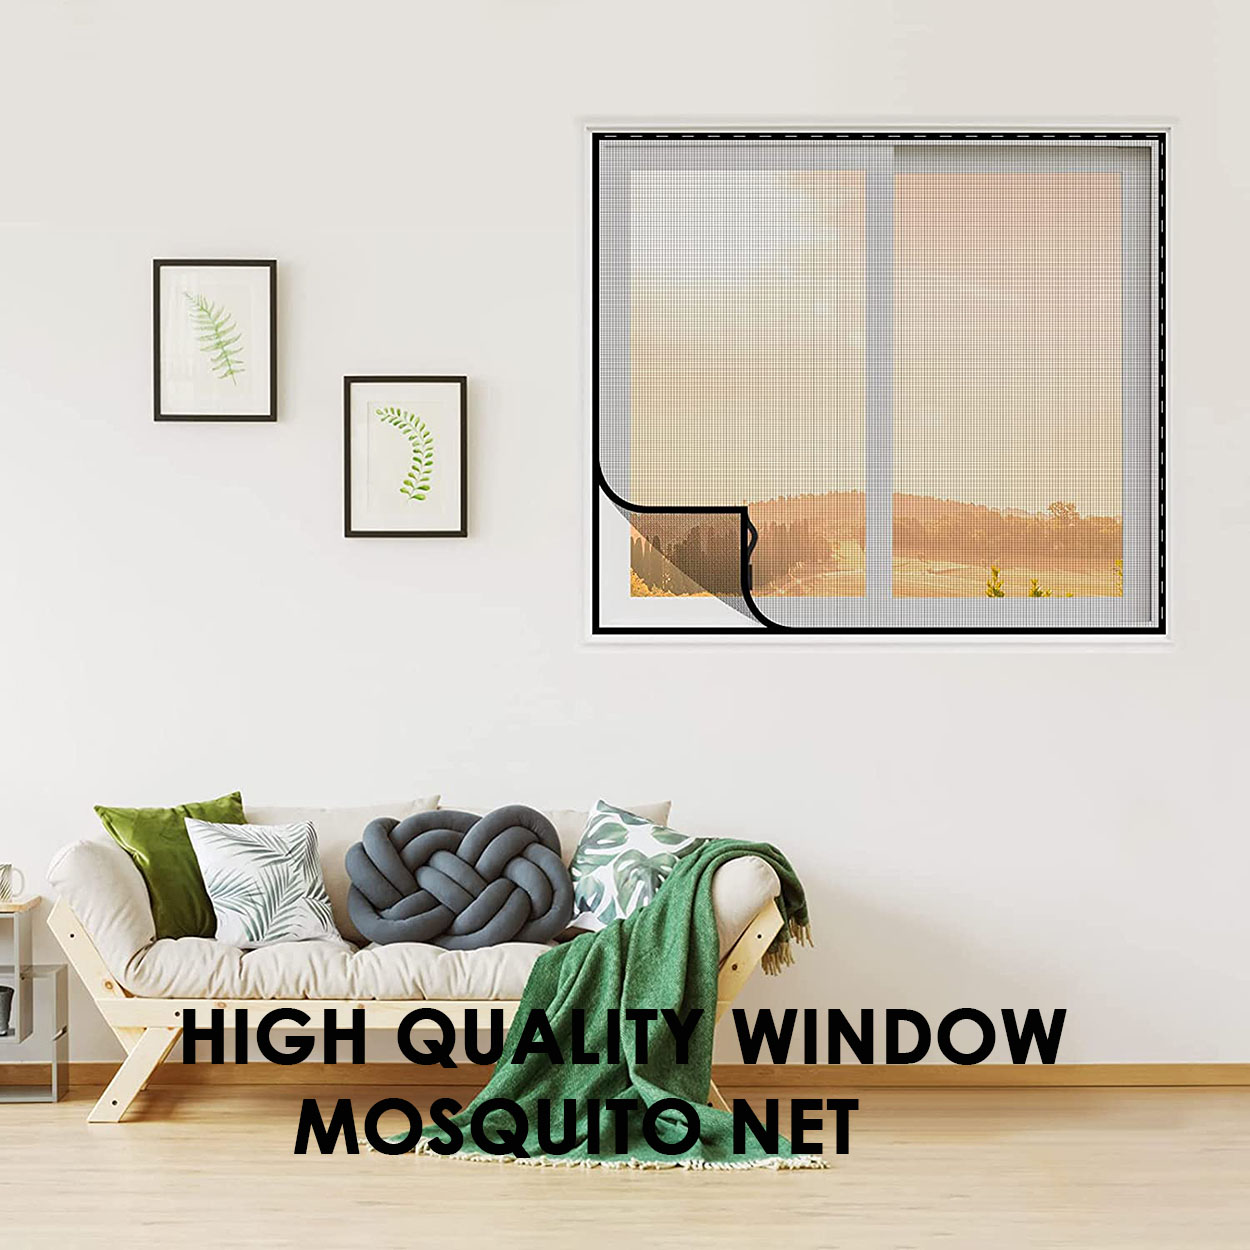 HIGH QUALITY WINDOW MOSQUITO NET